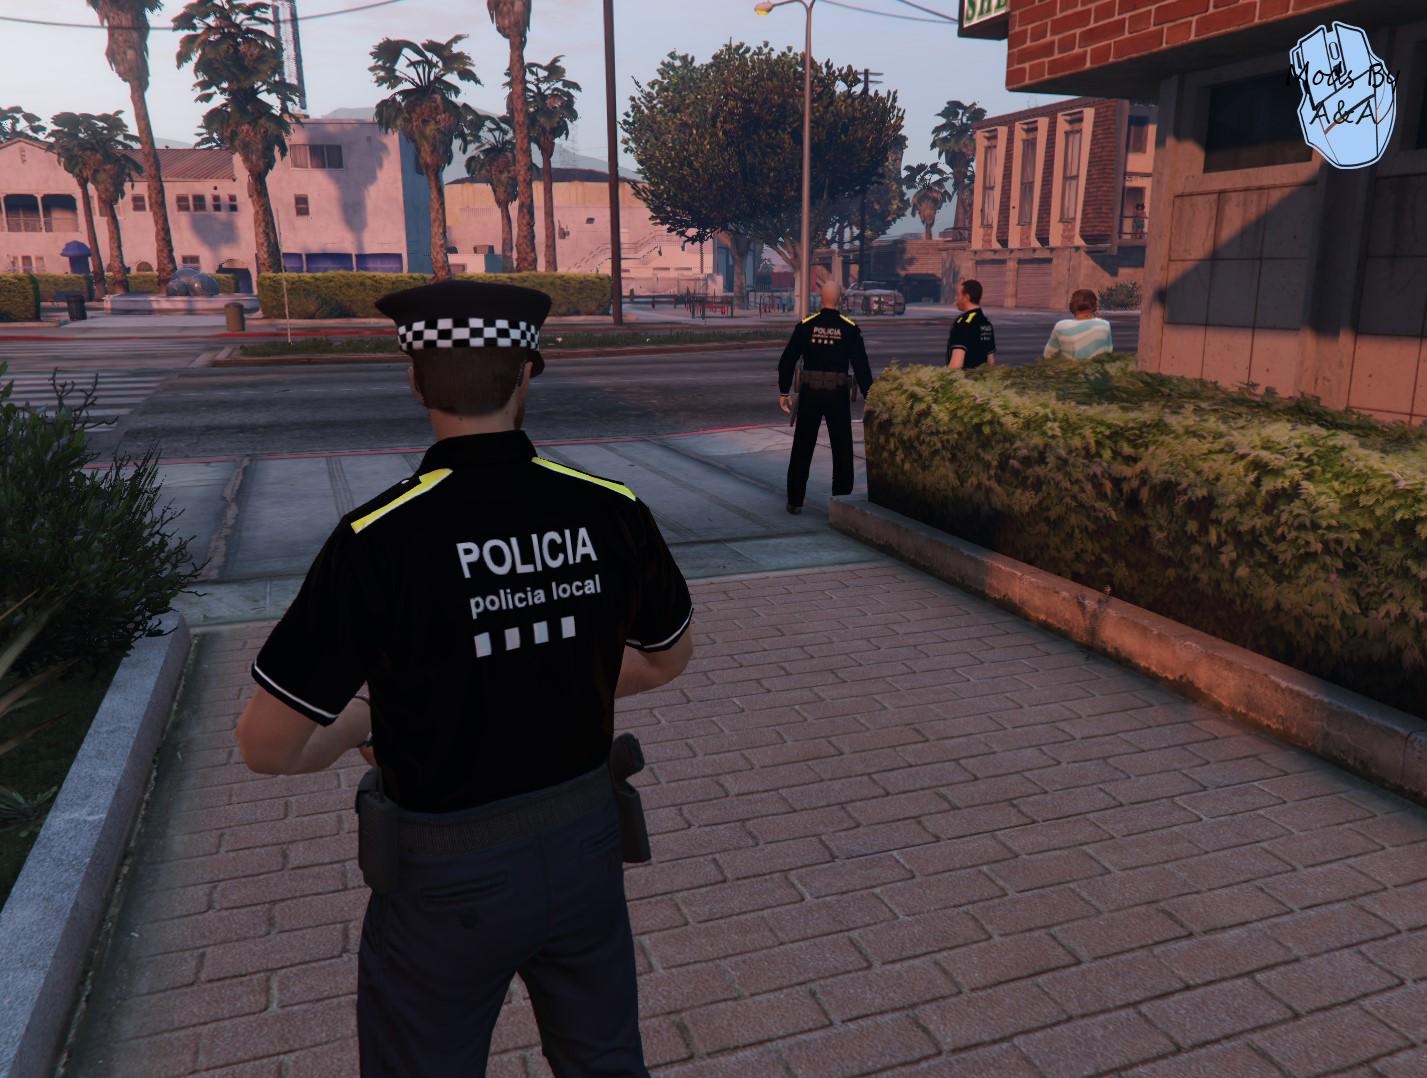 Uniforme Policia Local Catalunya - Player & Ped Modifications 